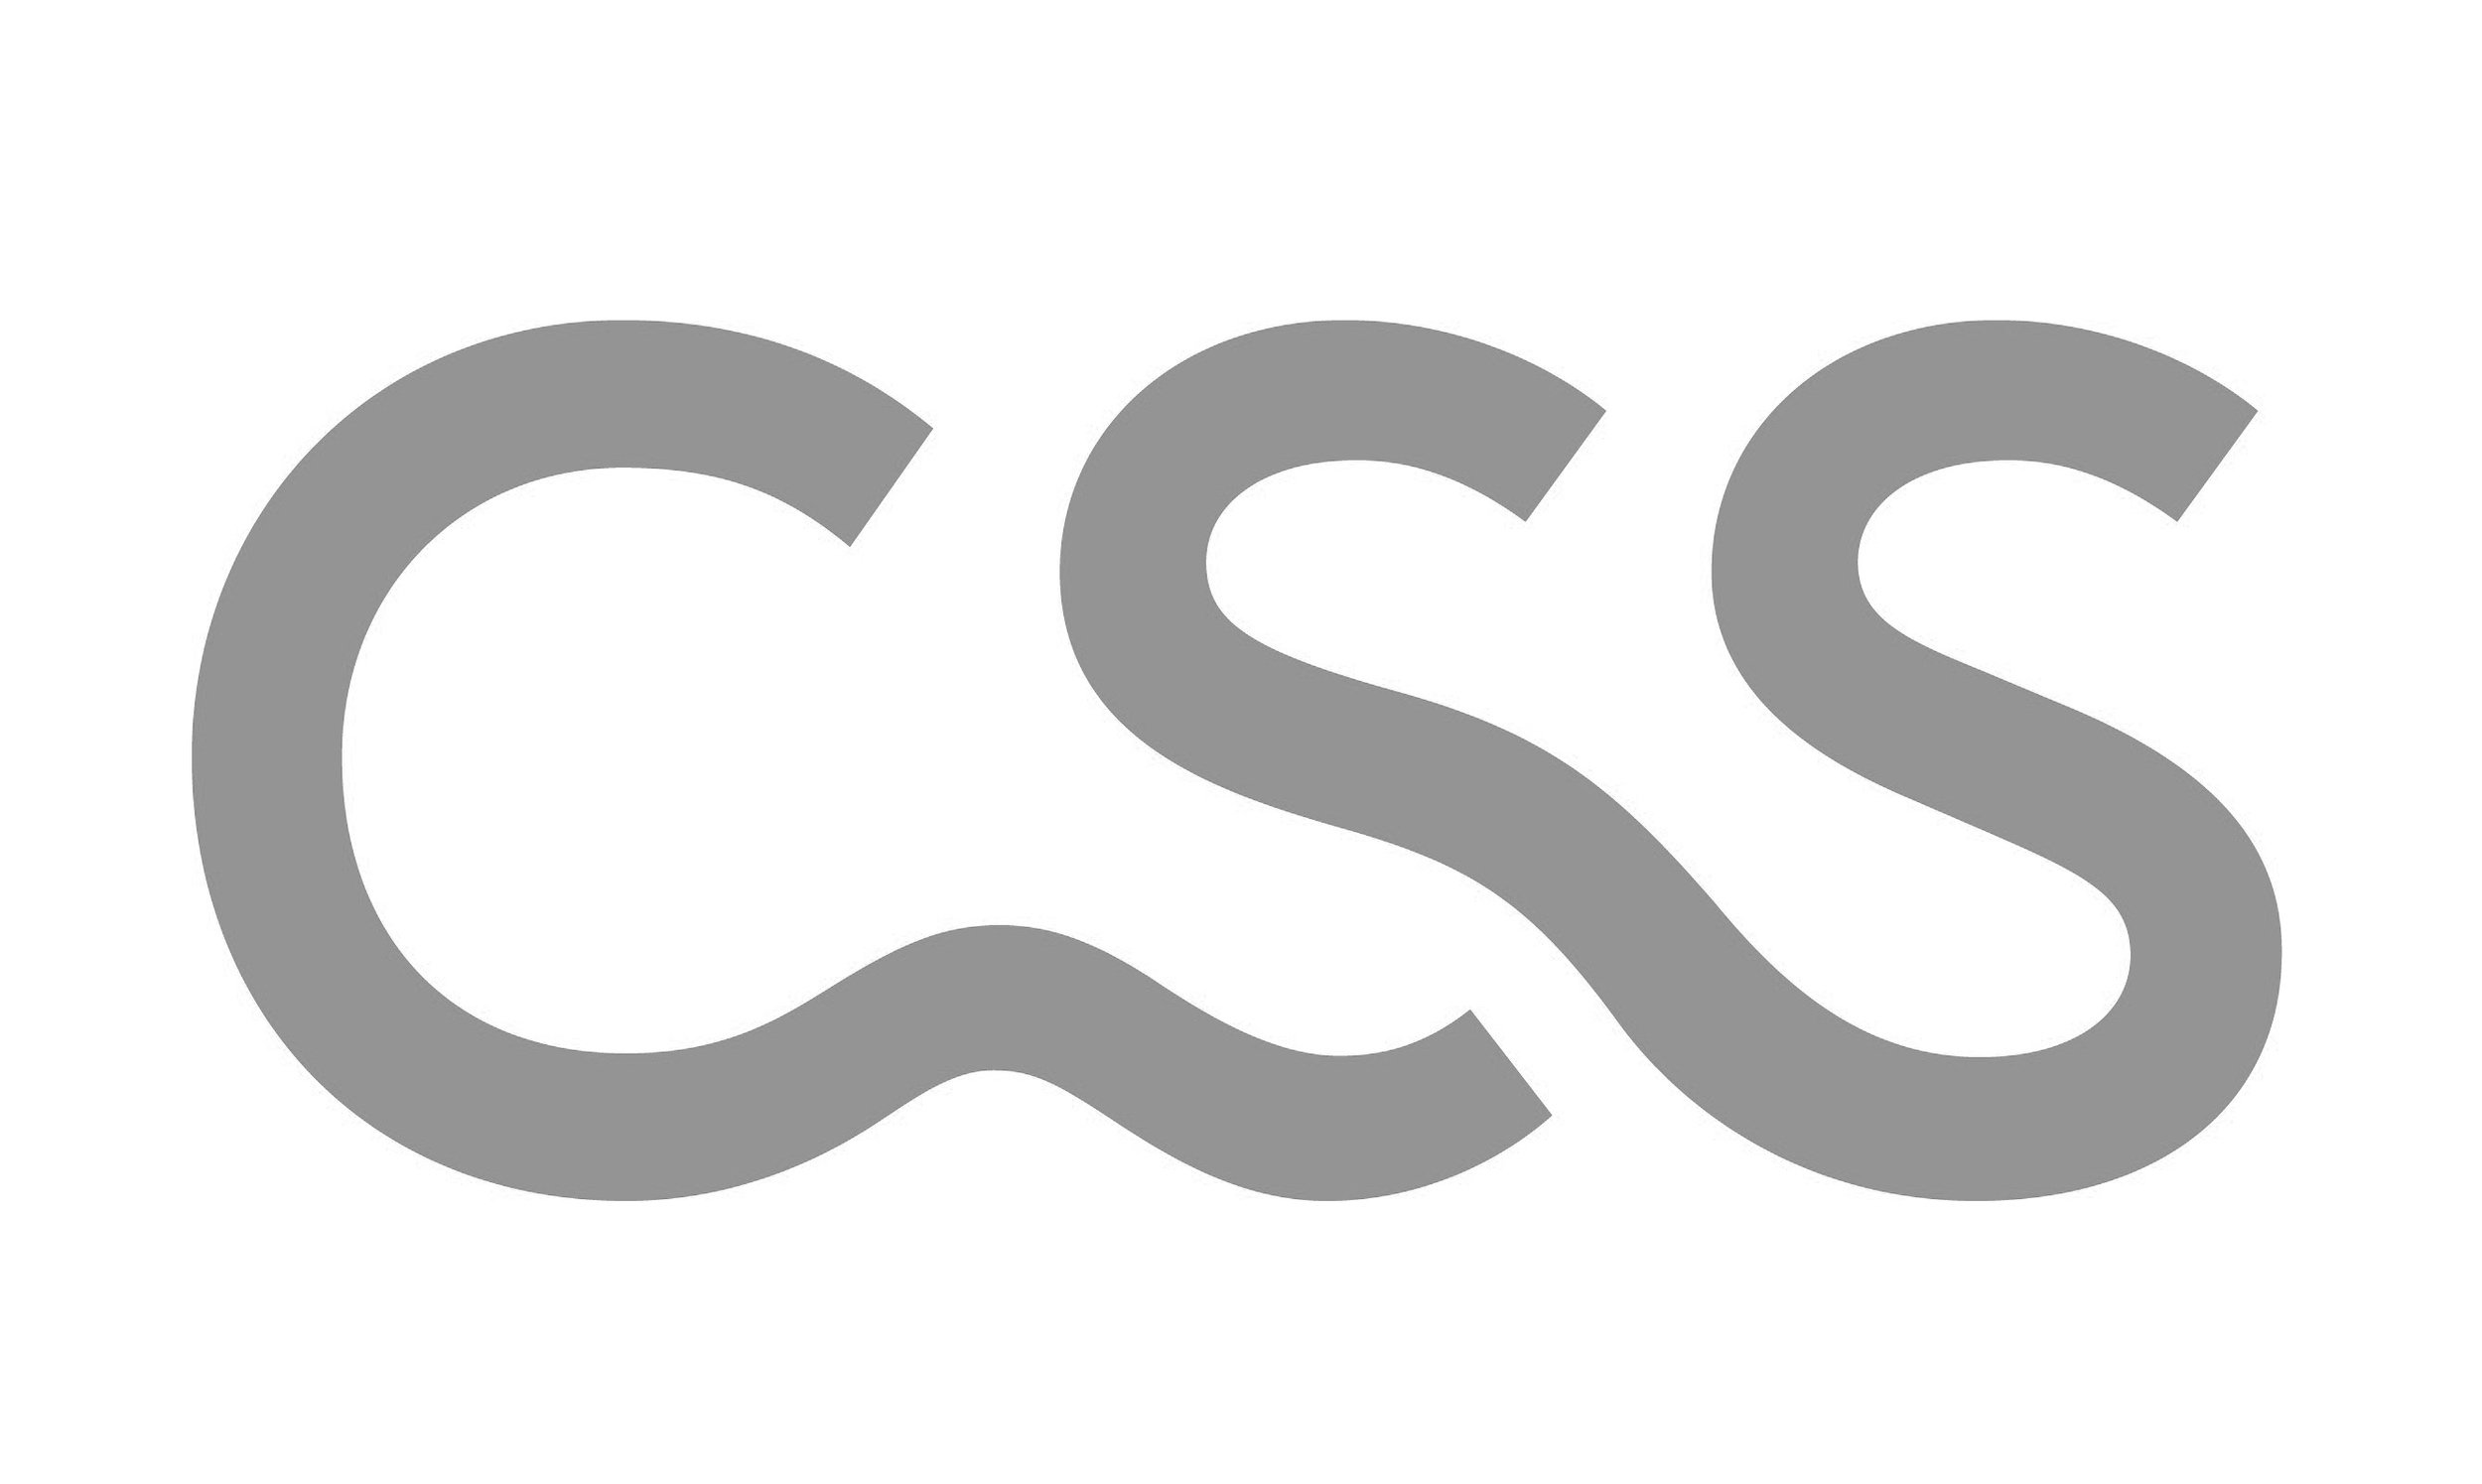 css-logo.jpg